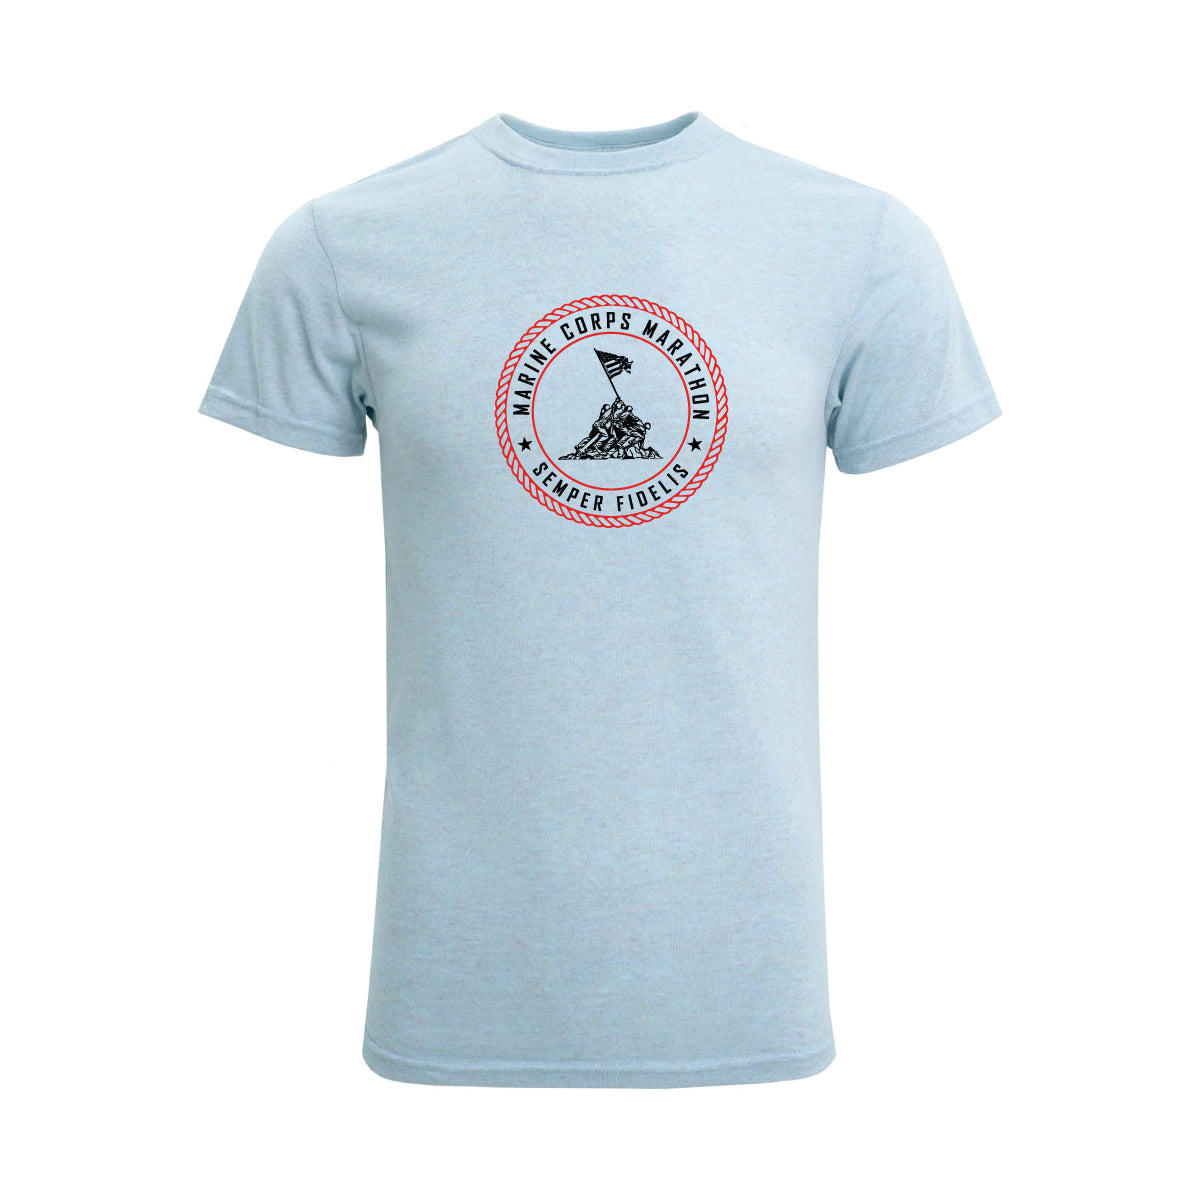 RS100 - Iwo Jima Short Sleeve T-Shirt